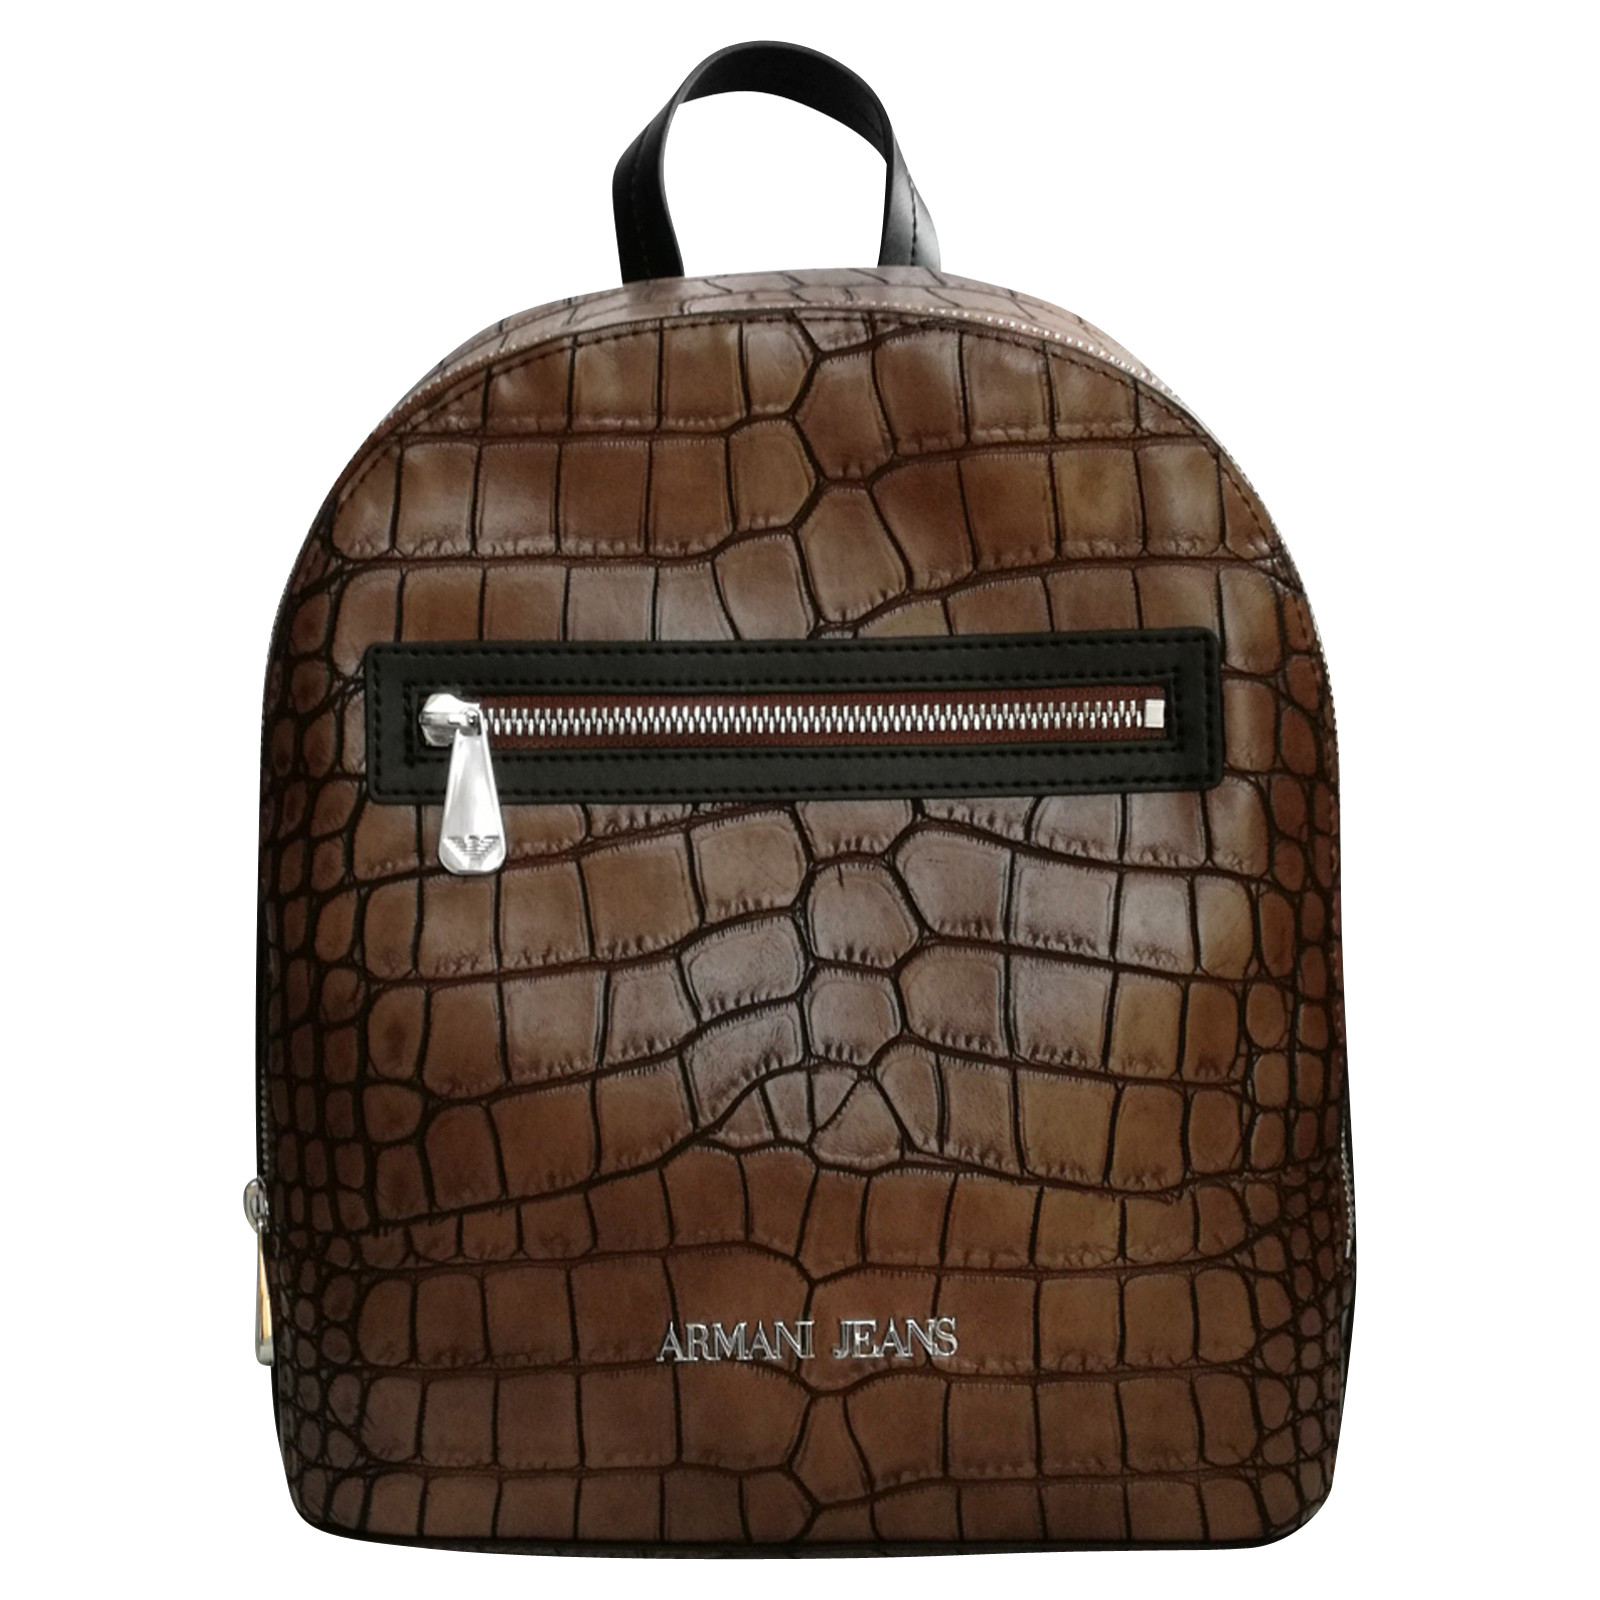 ARMANI JEANS Women's Backpack in crocodile leather look